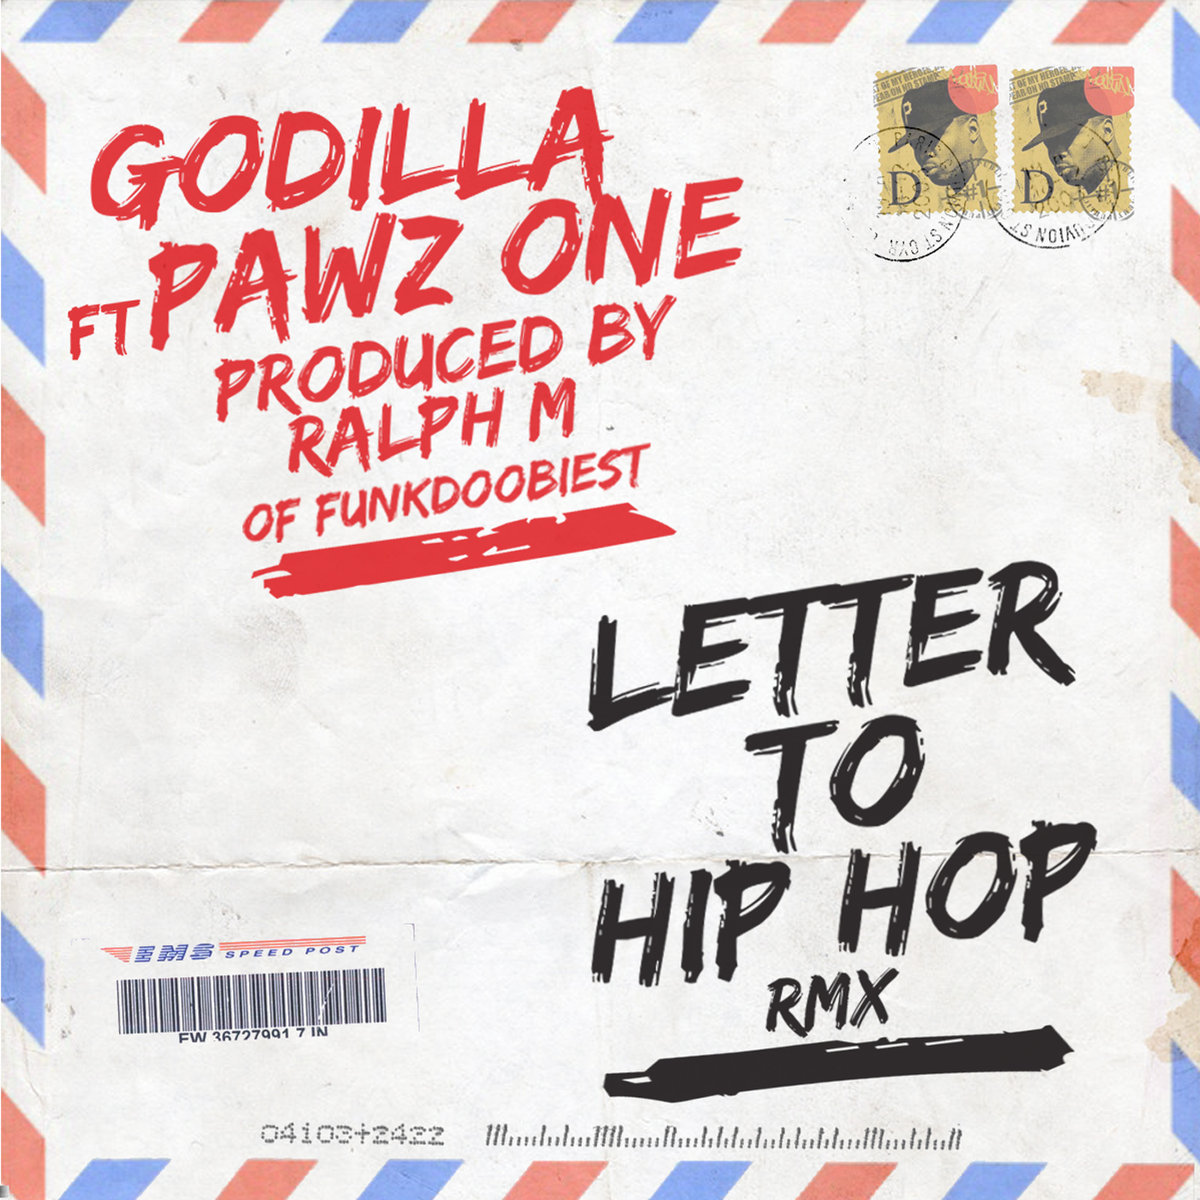 Godilla - Letter To Hip Hop Remix Ft. Pawz One (Prod. By Ralph M)